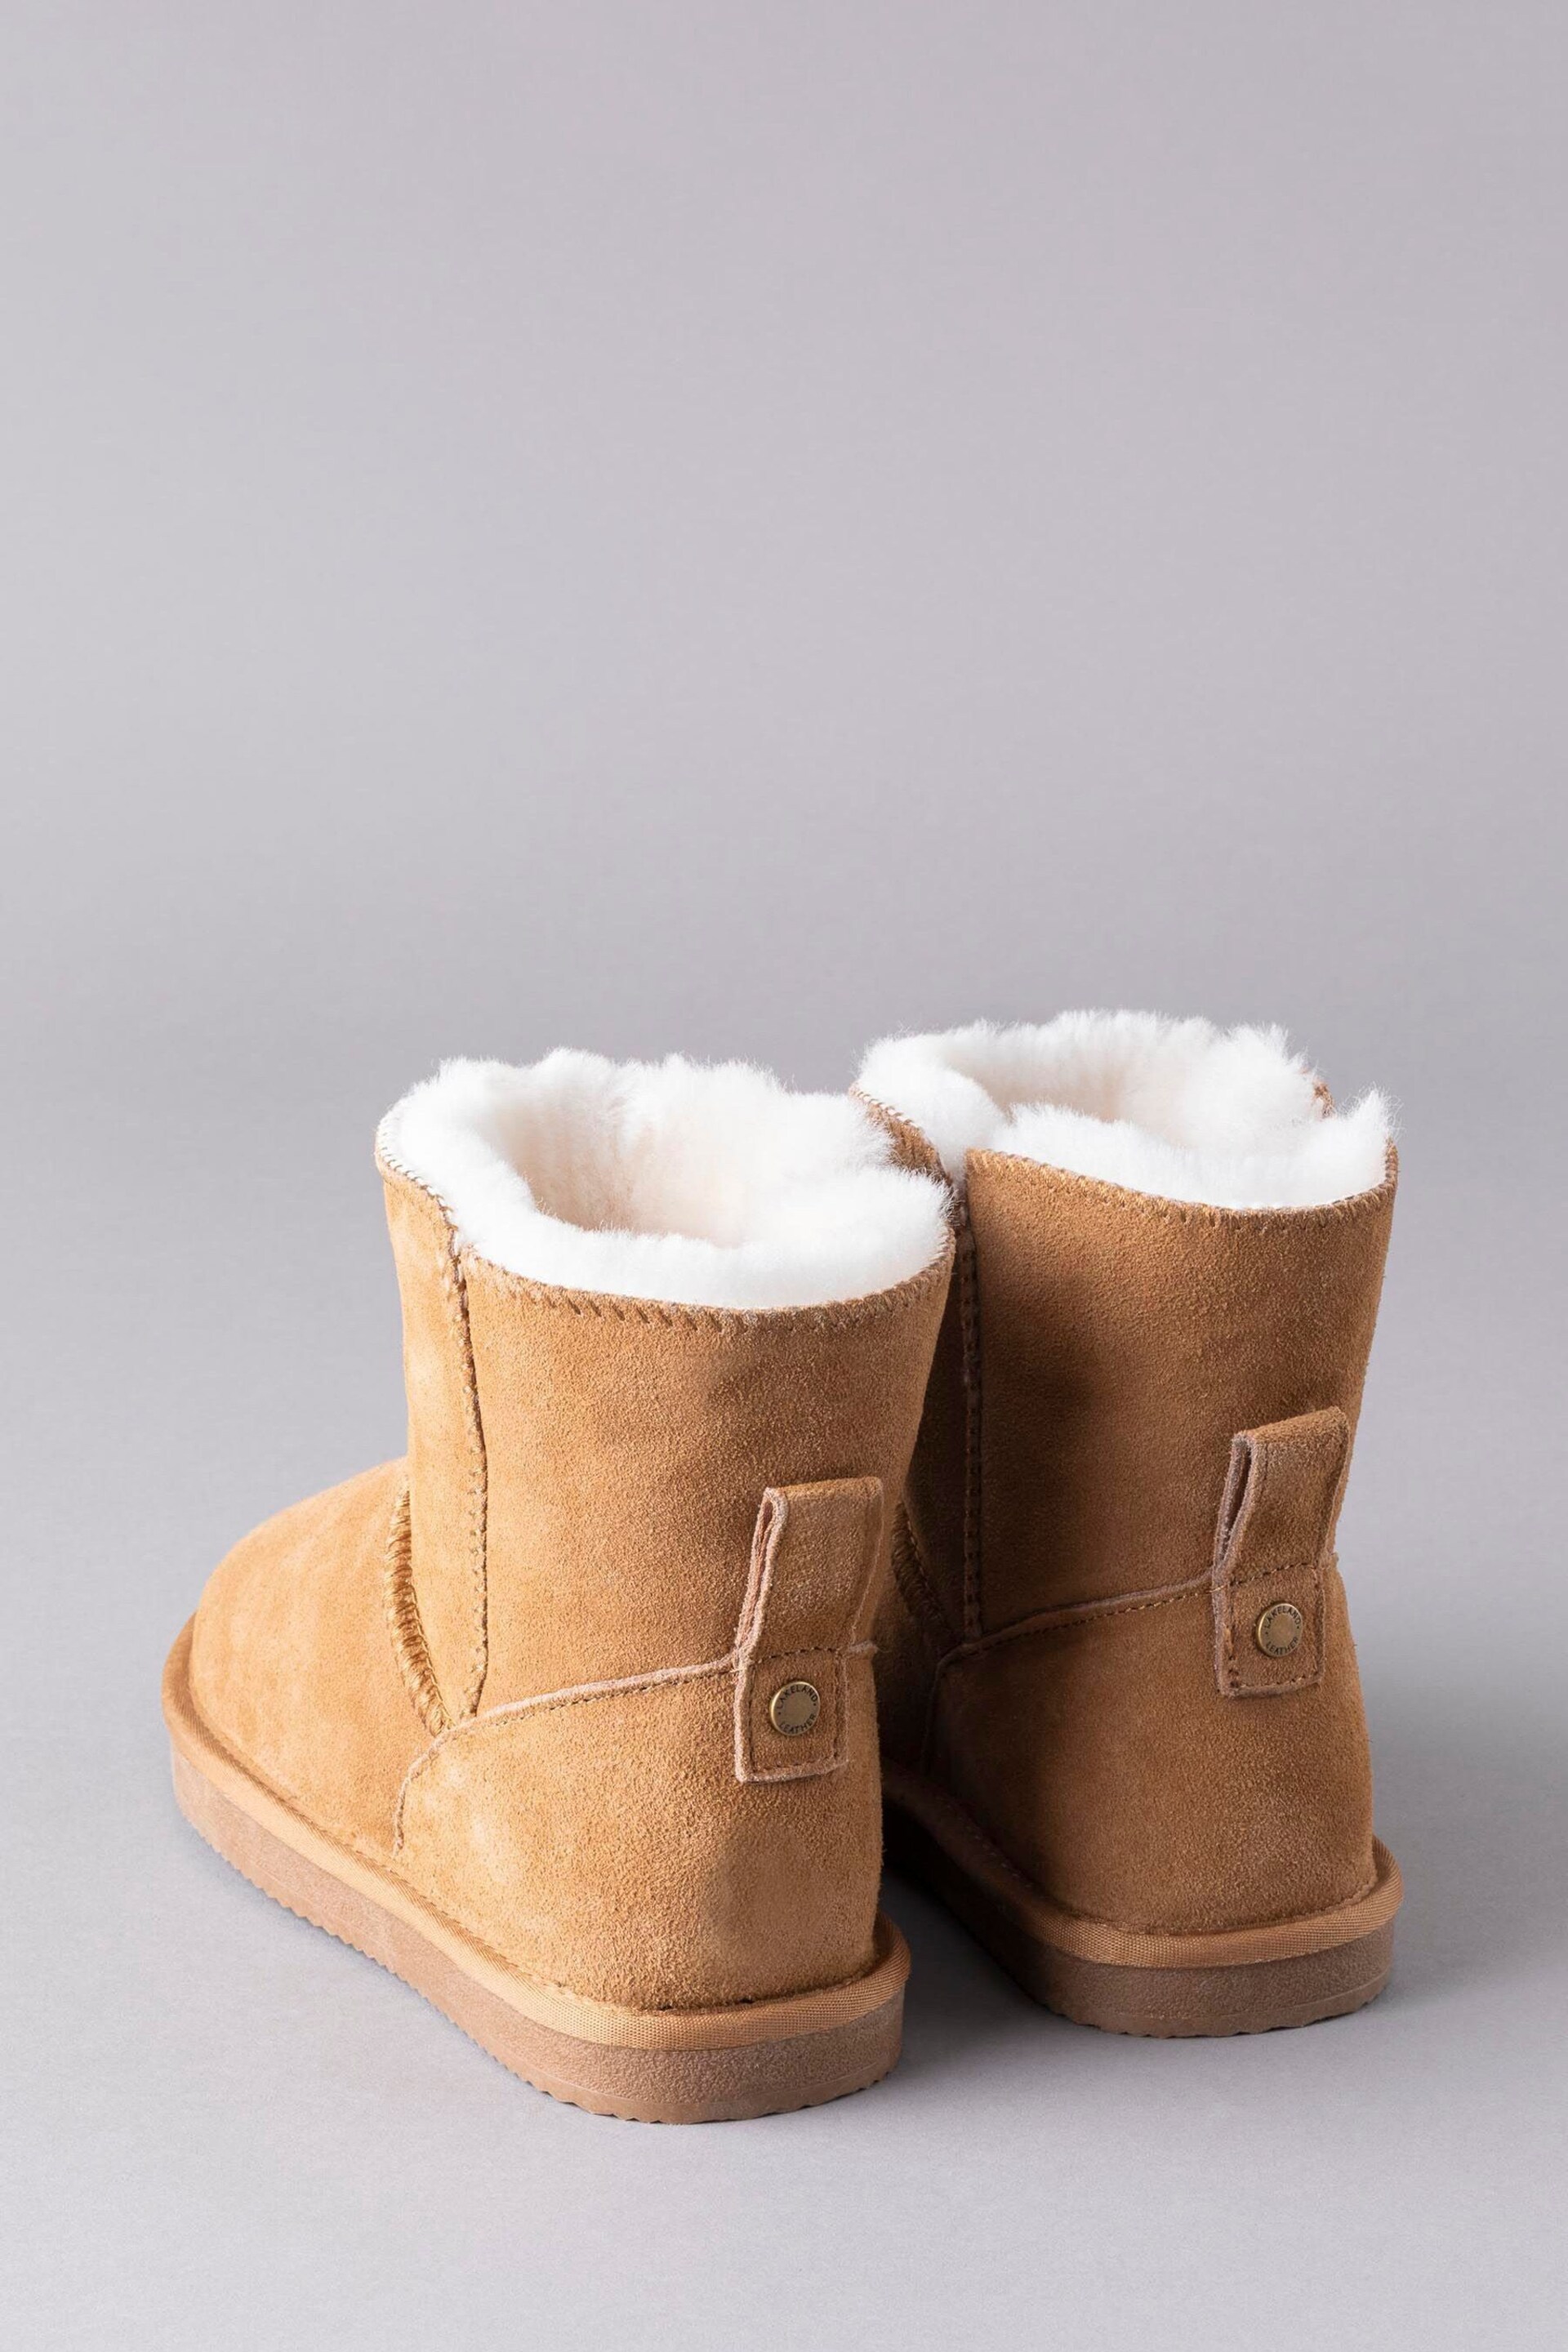 Lakeland Leather Tan Brown Ladies Sheepskin Boots Slippers - Image 3 of 5